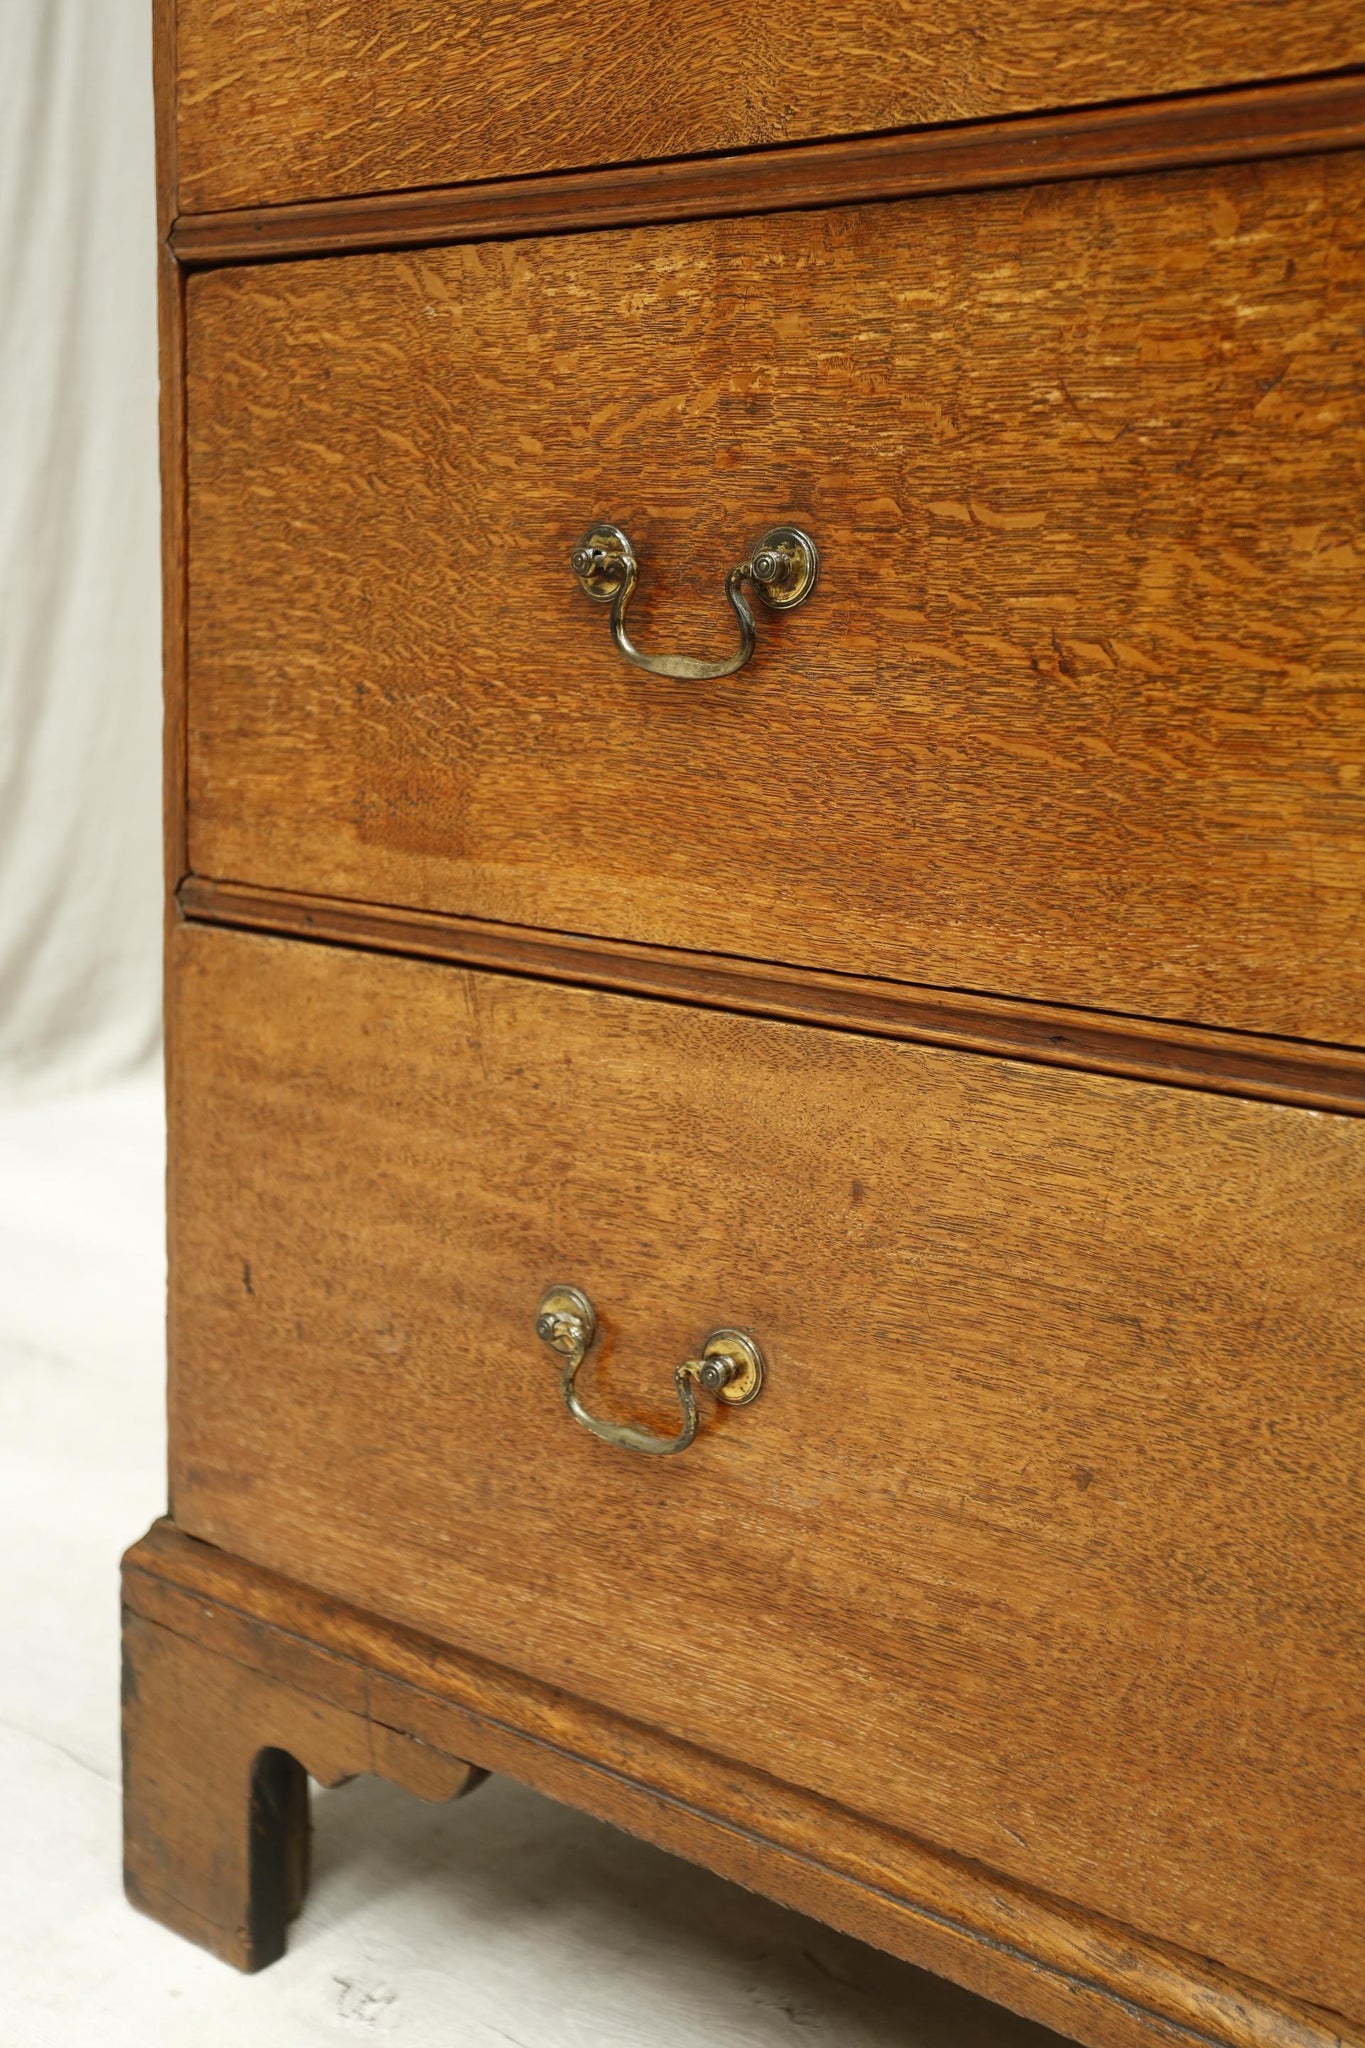 Georgian Oak chest of drawers